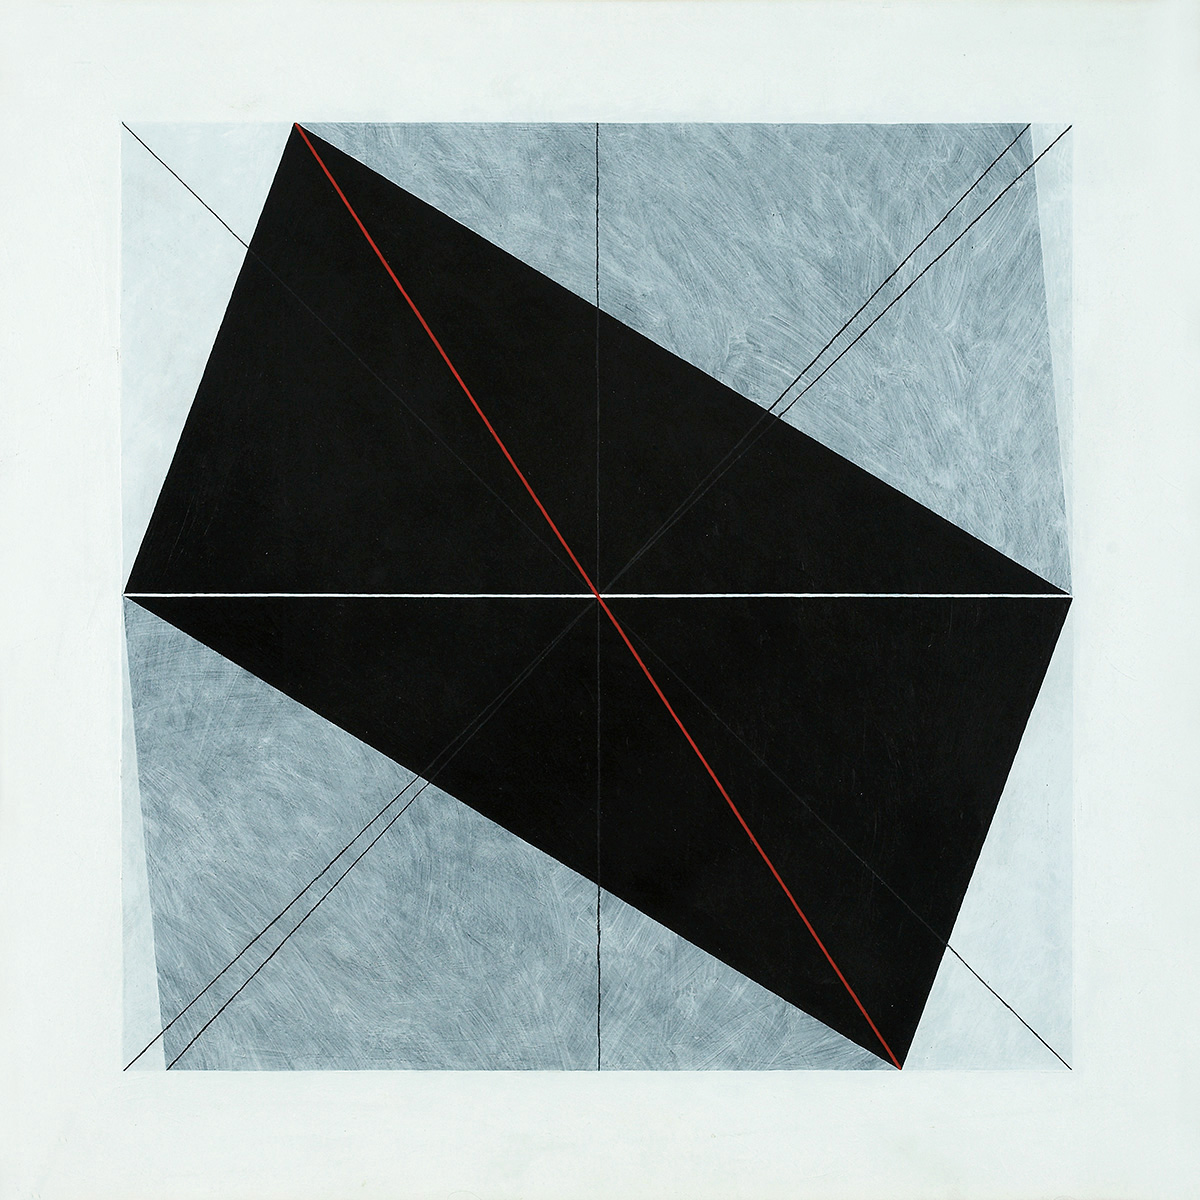 Strukturanalysen zu Mirakel (1), 1986/198965 x 65 cmAcrylic, graphite on drawing board; framed in museum glass